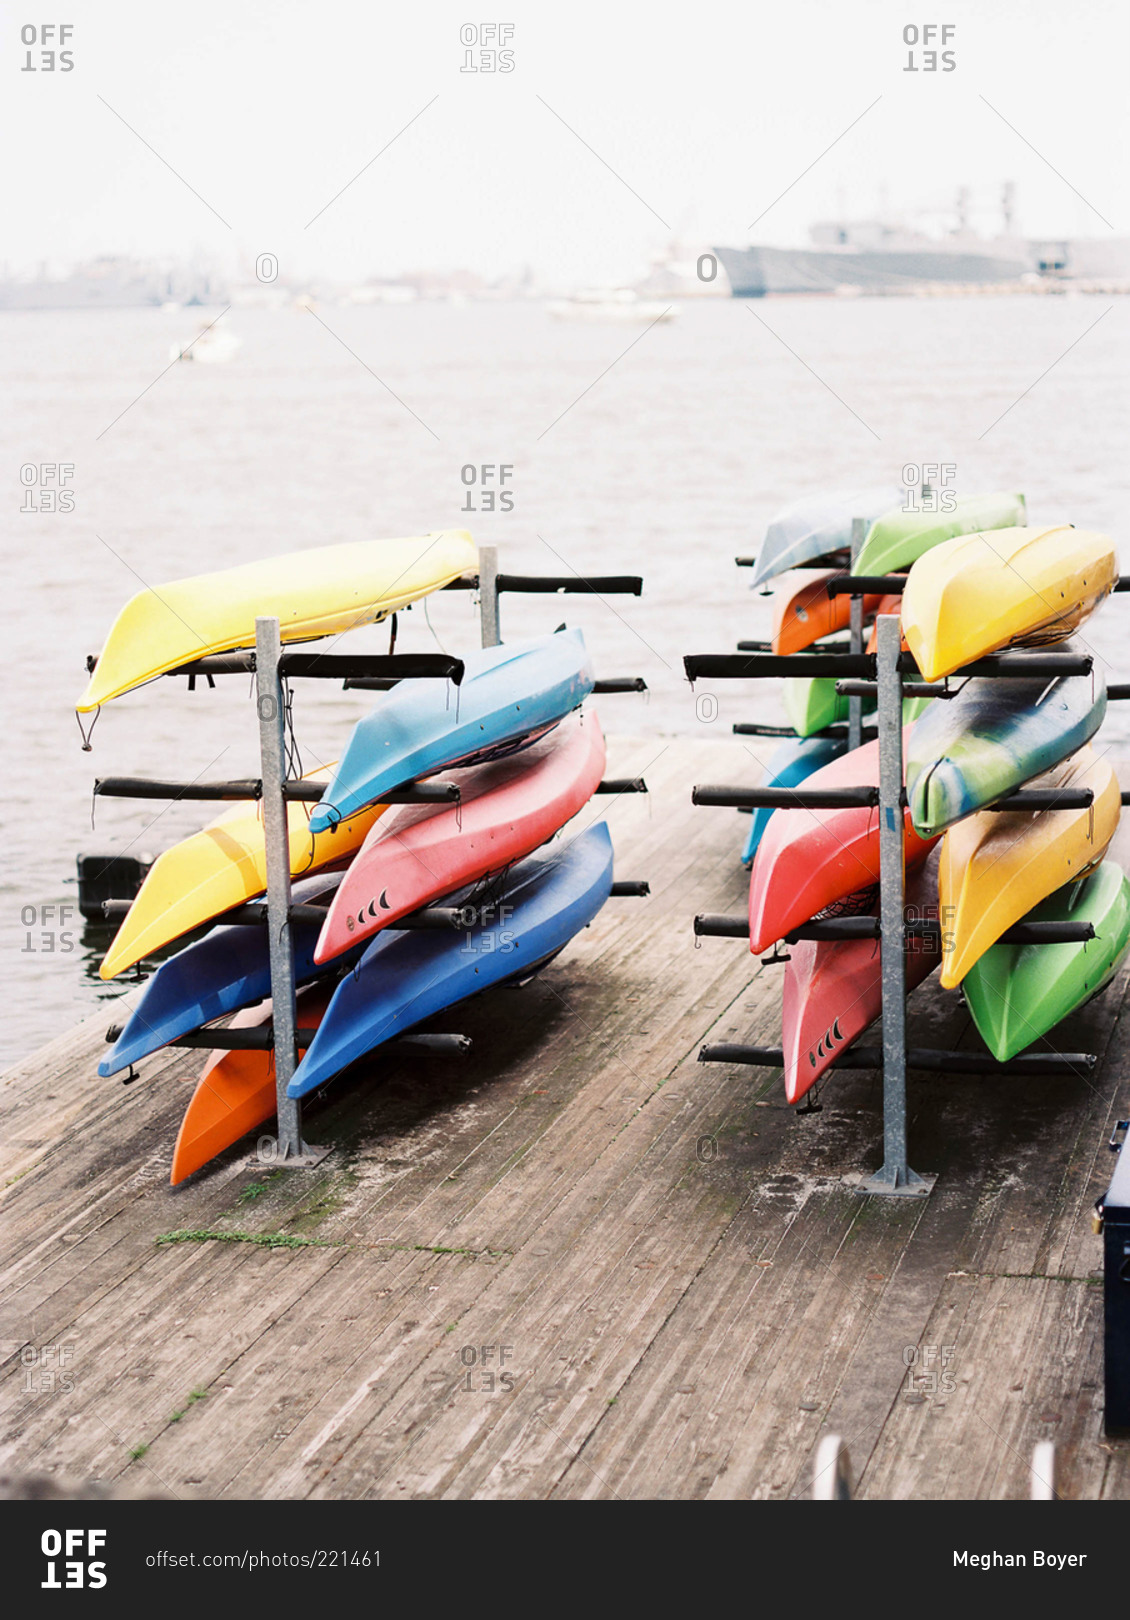 Canoes on rack in harbor